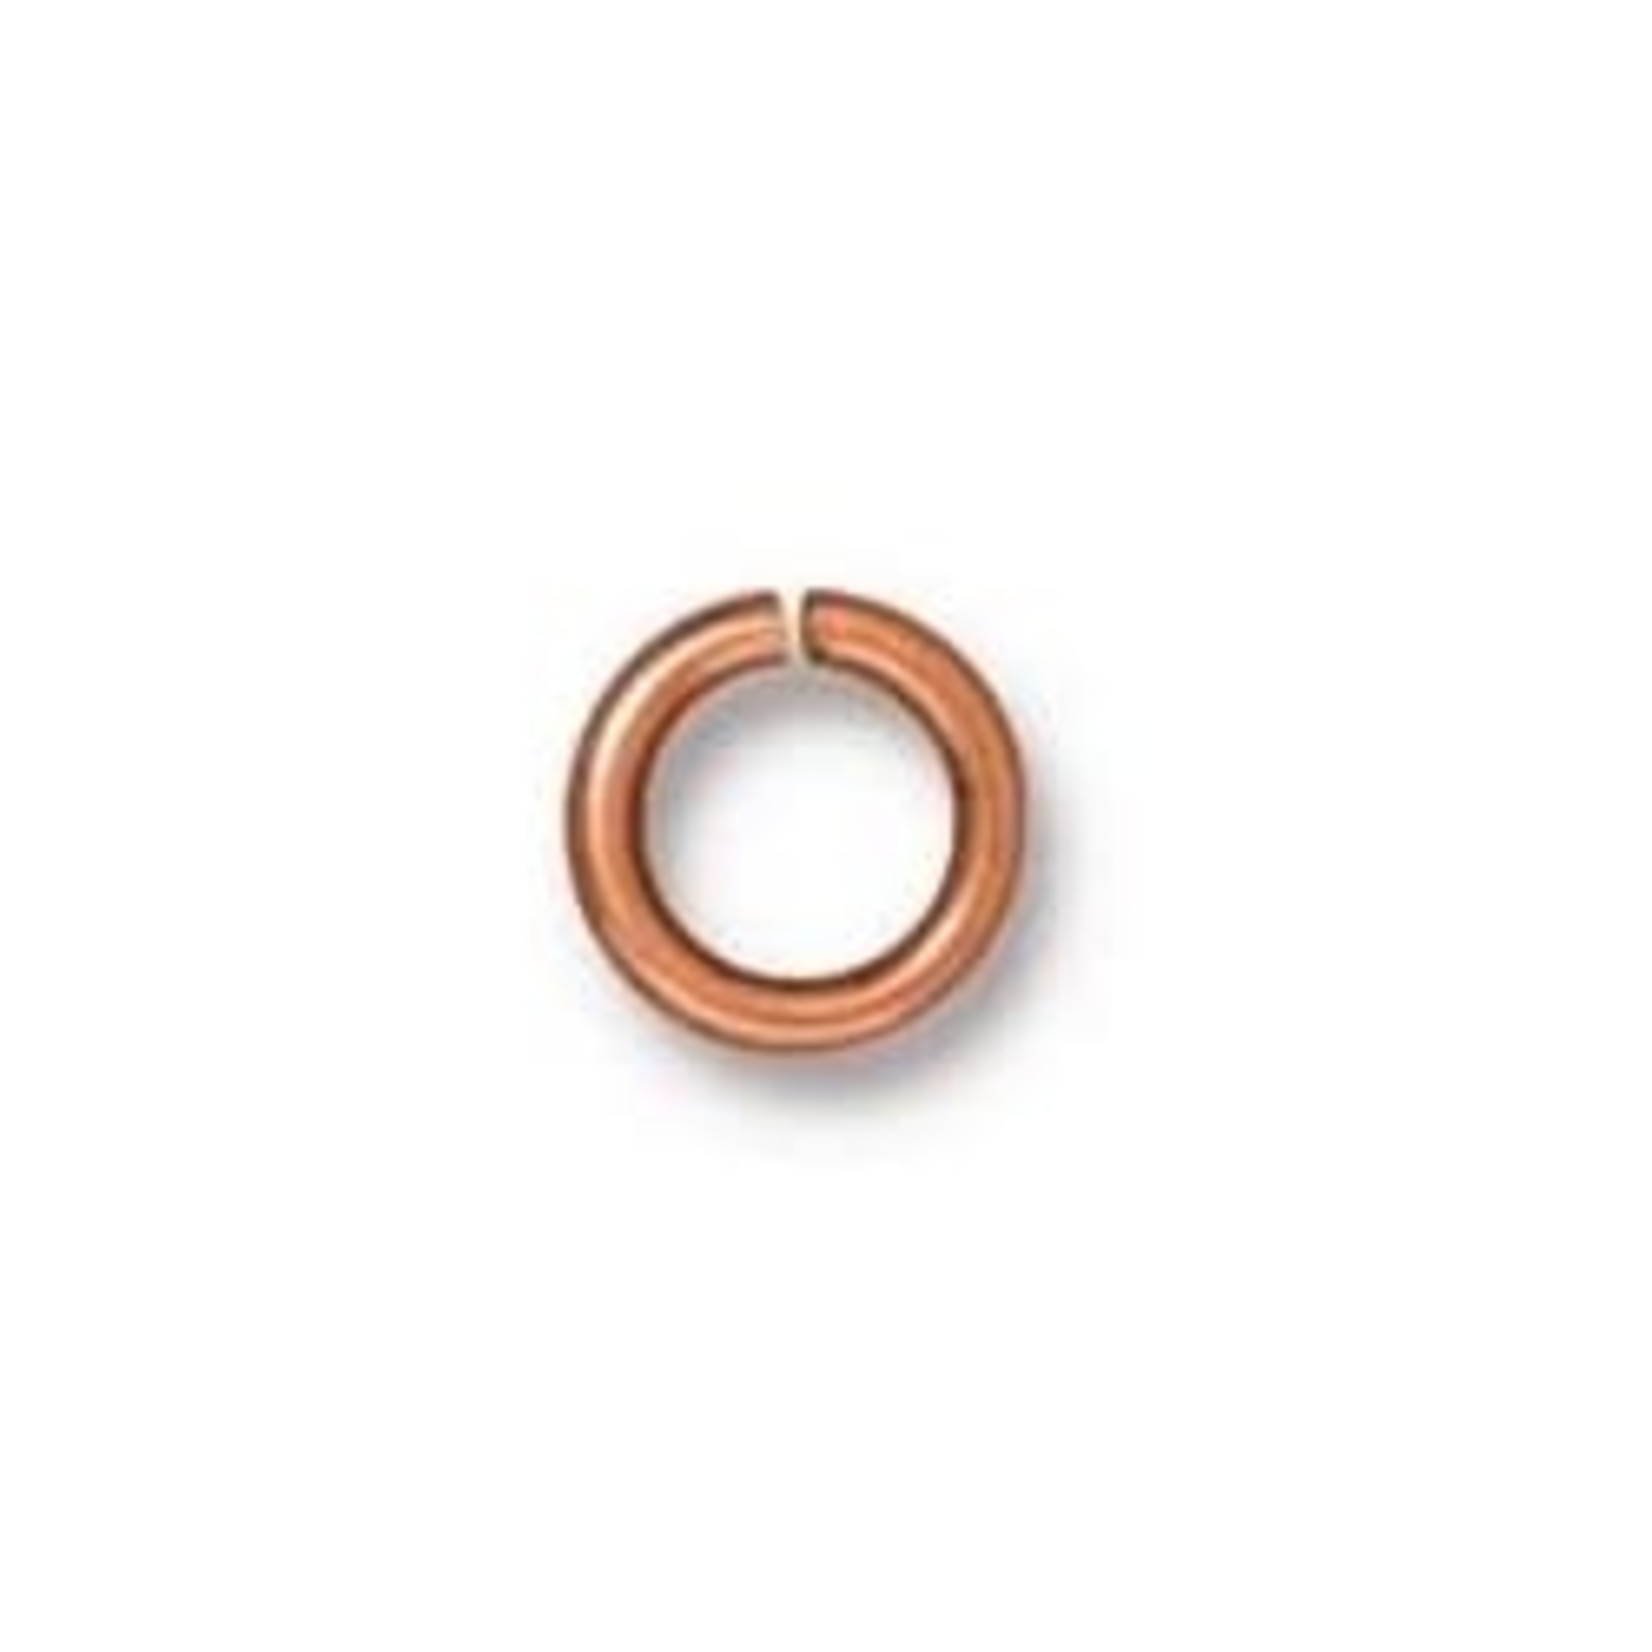 TierraCast Tierracast Copper Round Jump Ring 16 Ga, 5mm ID - 100 pieces